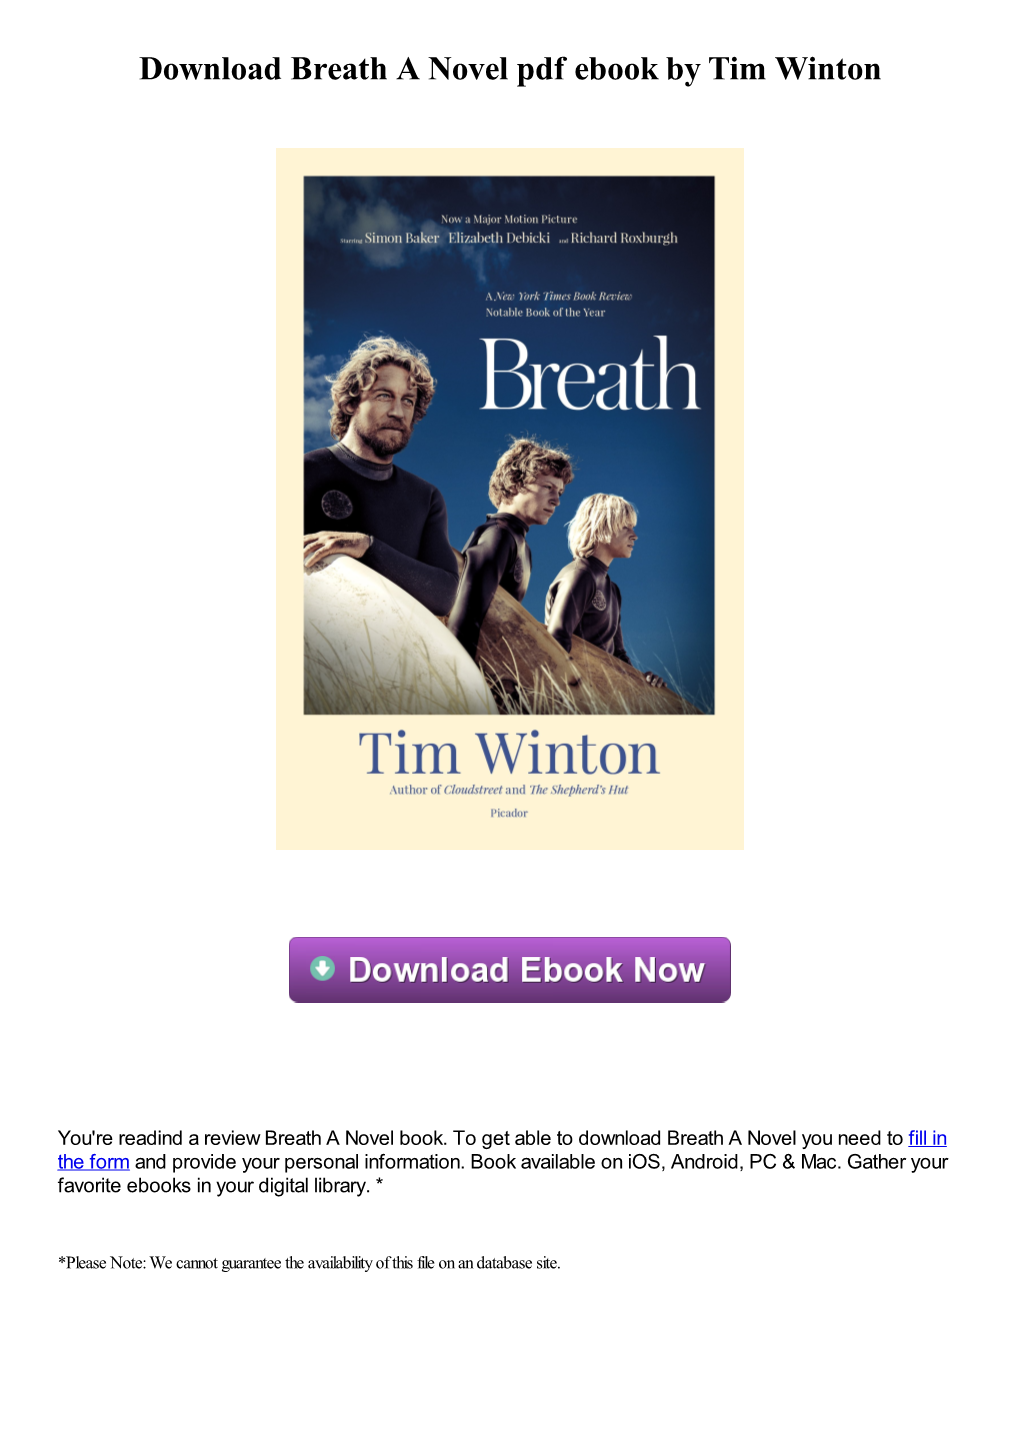 Download Breath a Novel Pdf Ebook by Tim Winton